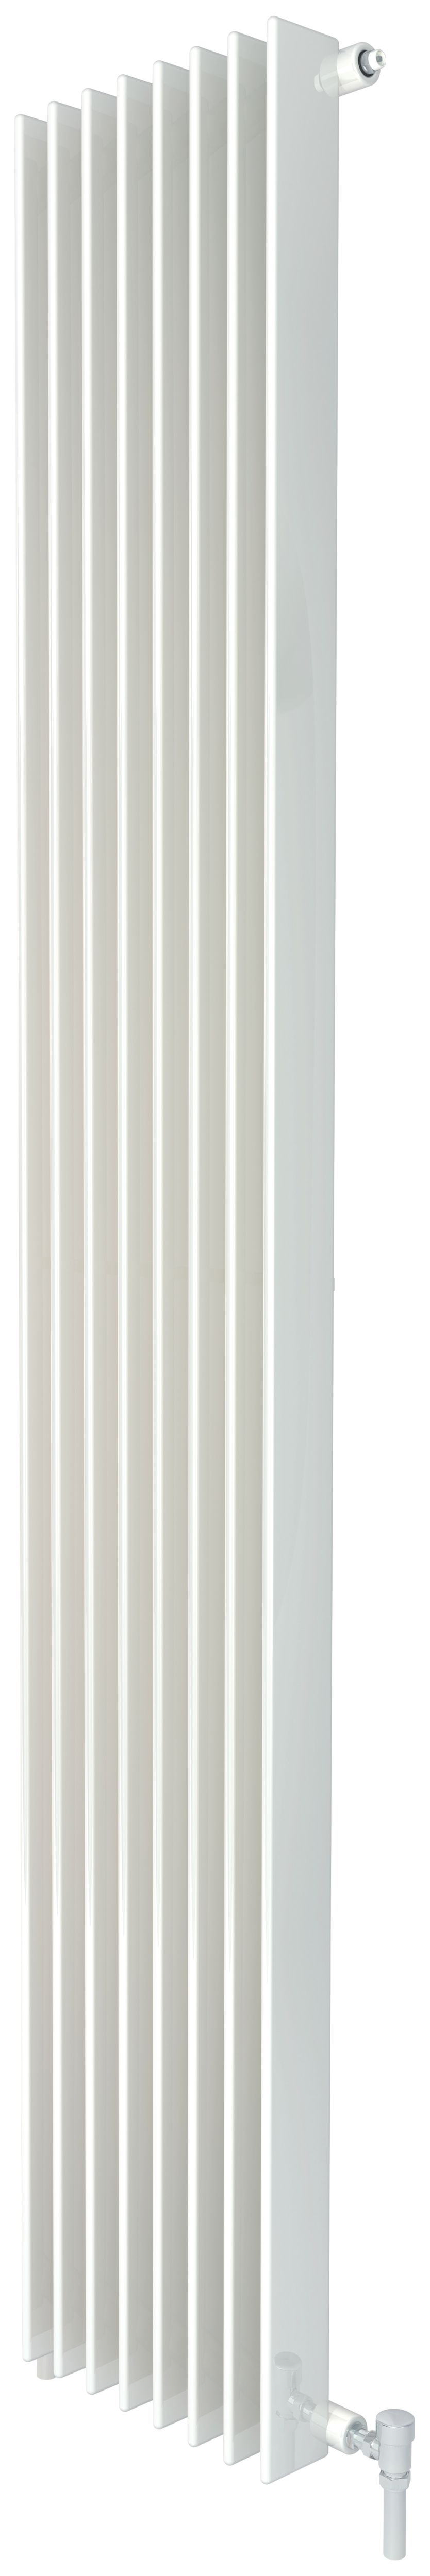 Image of Henrad Verona Slim Single Panel Vertical Designer Radiator - White 2000 x 440 mm